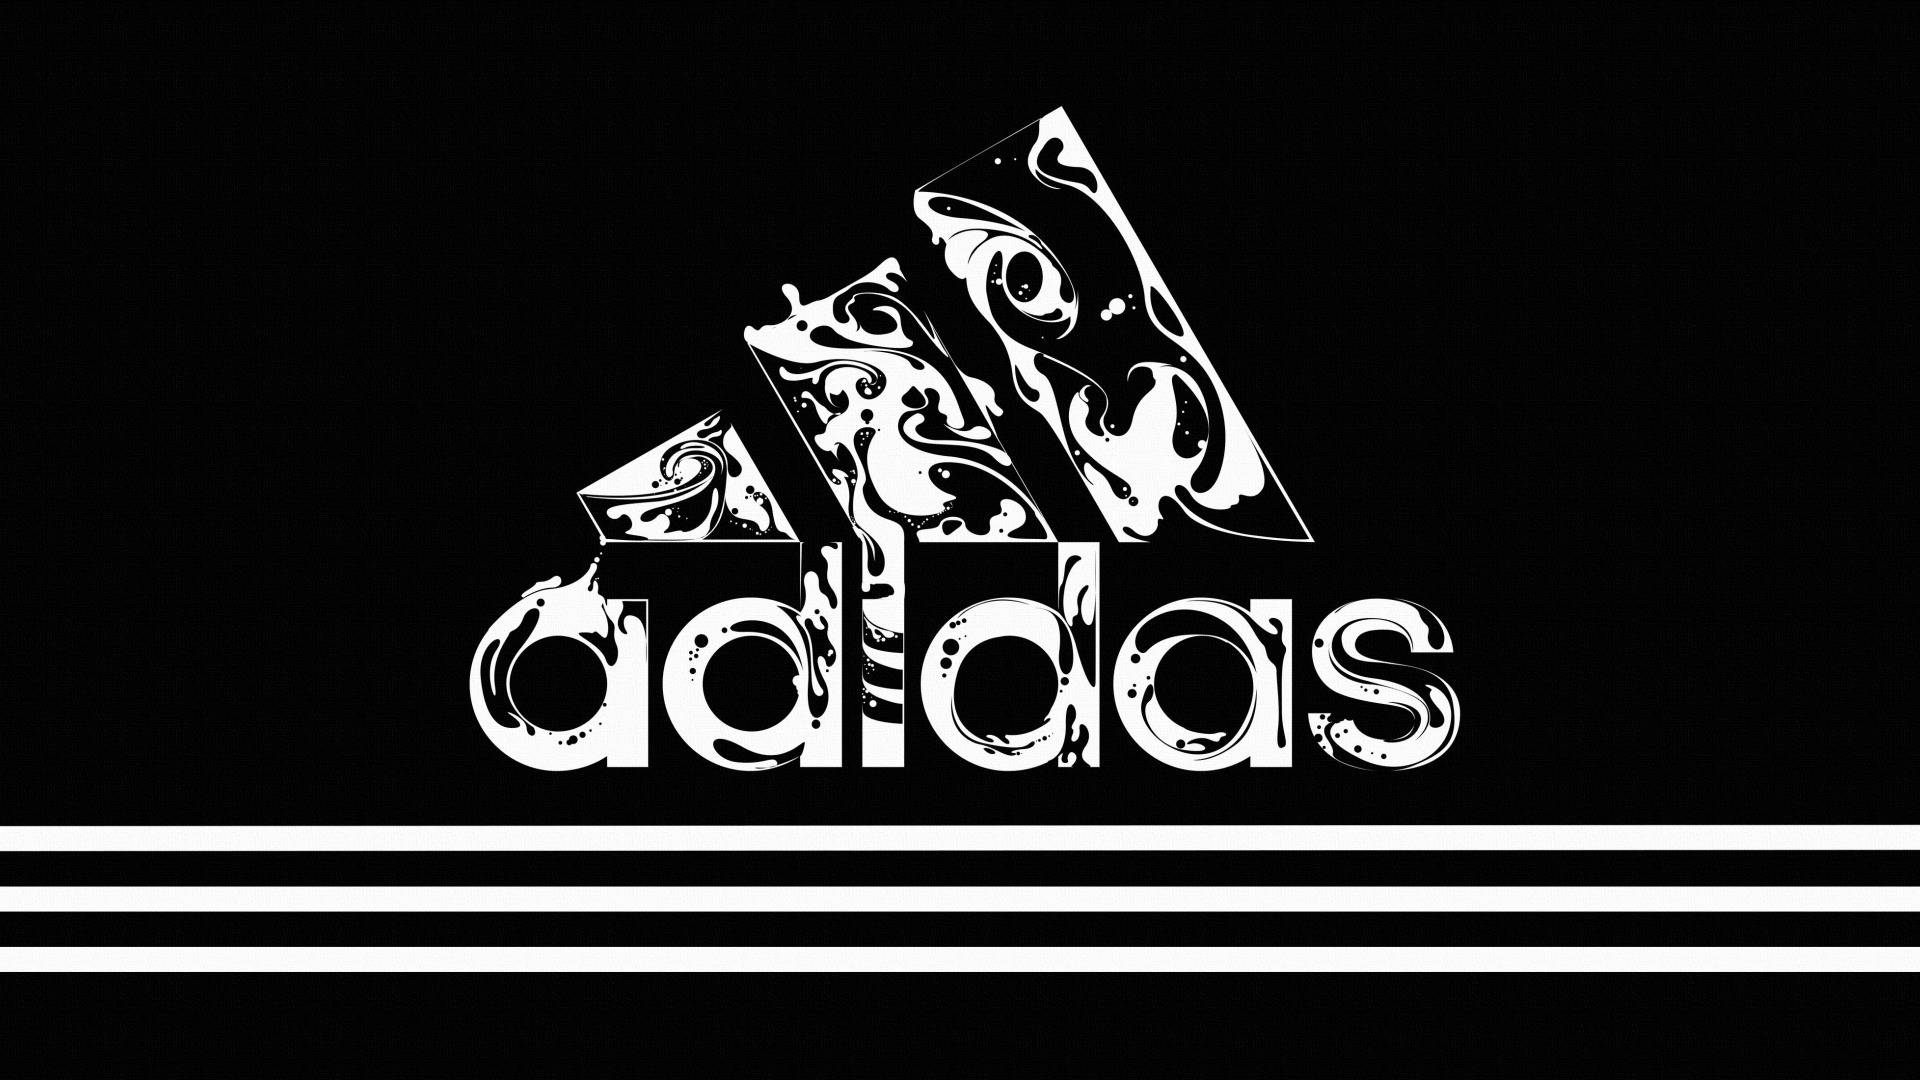 Aquatic Inspired Adidas Logo Background